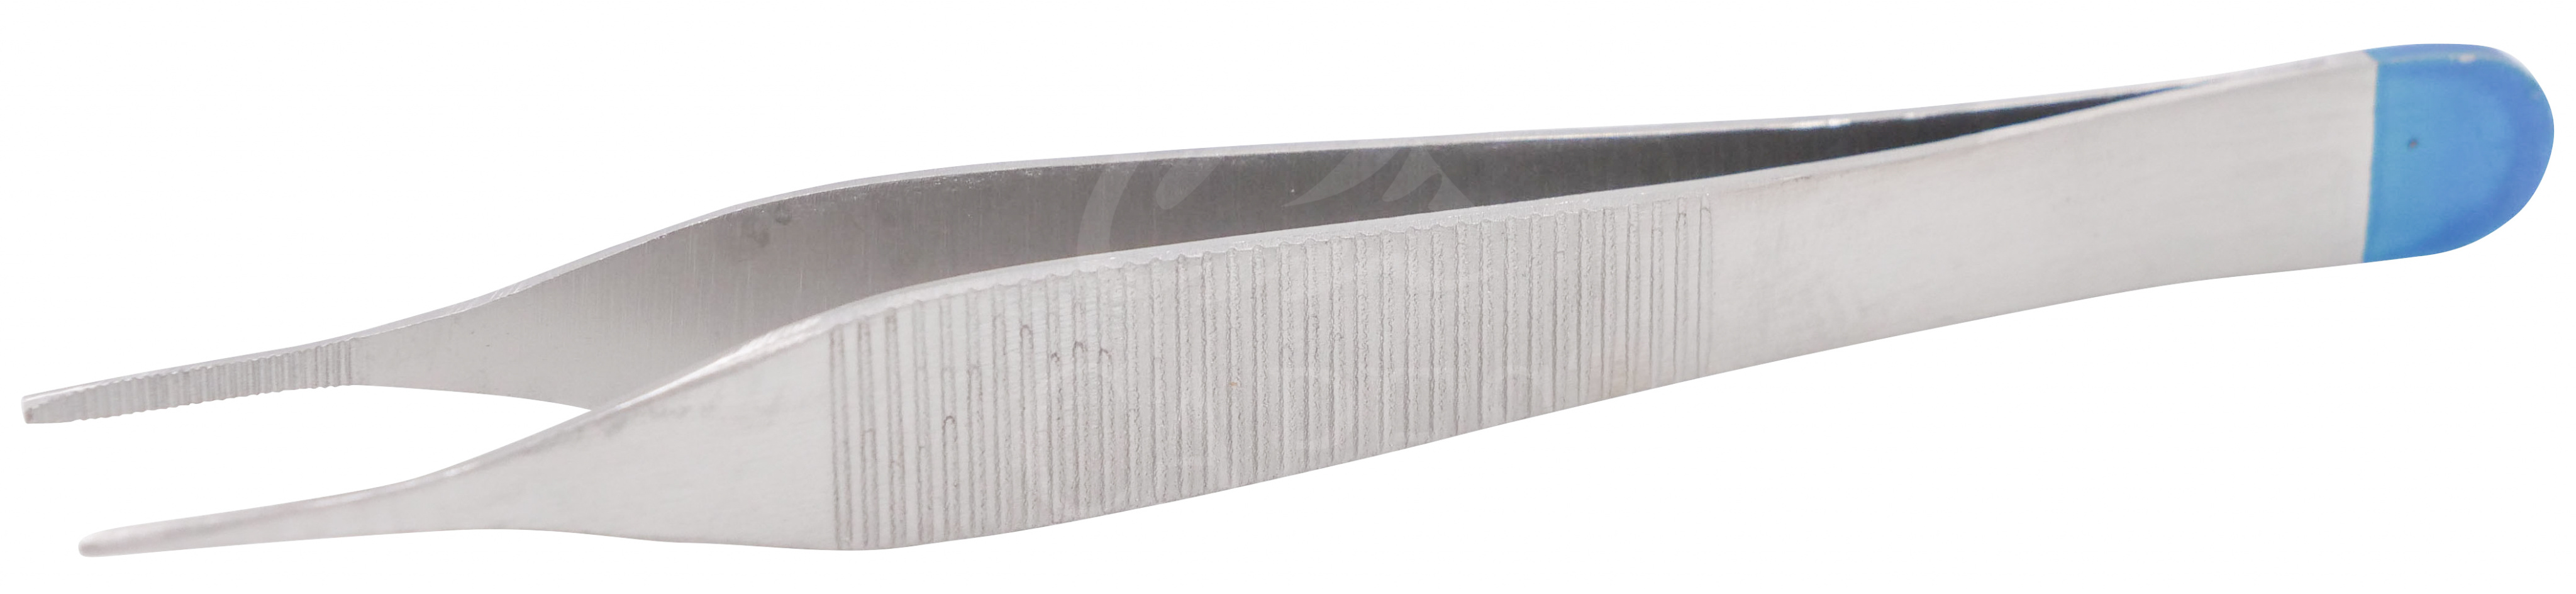 Bamford Micro-Adson Forcep Plain STERILE 12.5cm image 0